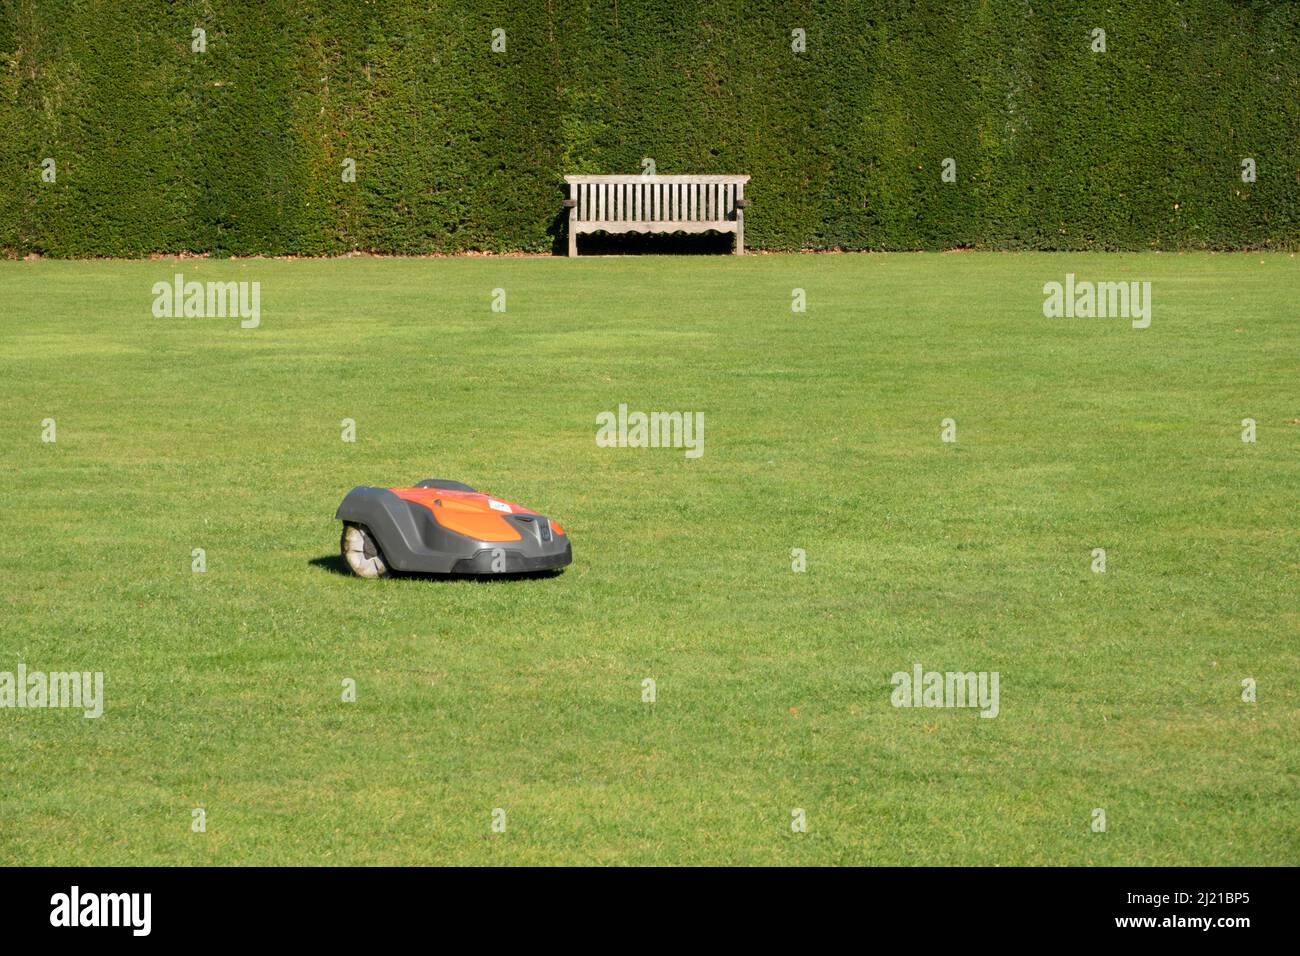 A robotic lawn mower cutting grass Stock Photo